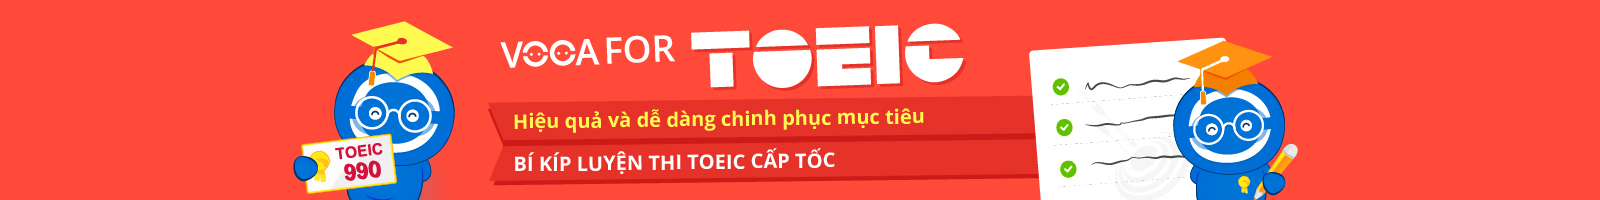 VOCA FOR TOEIC (NEW)